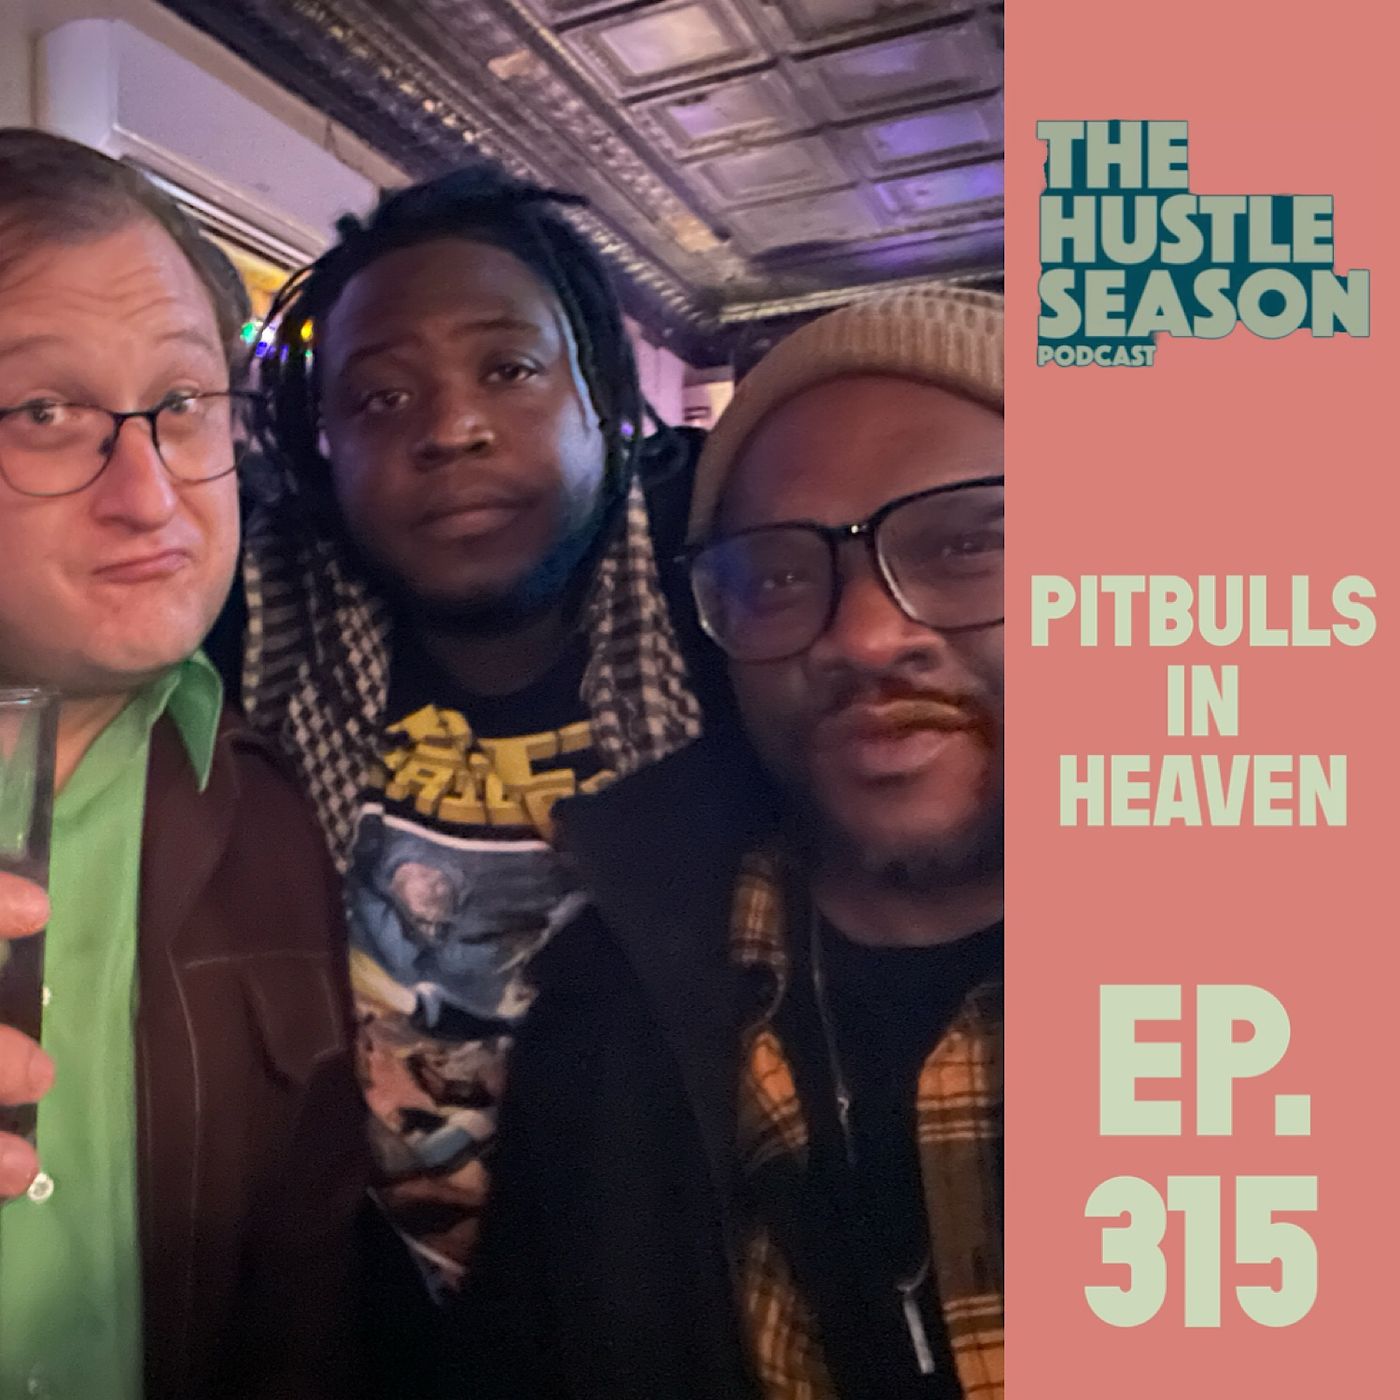 The Hustle Season: Ep. 315 Pitbulls in Heaven